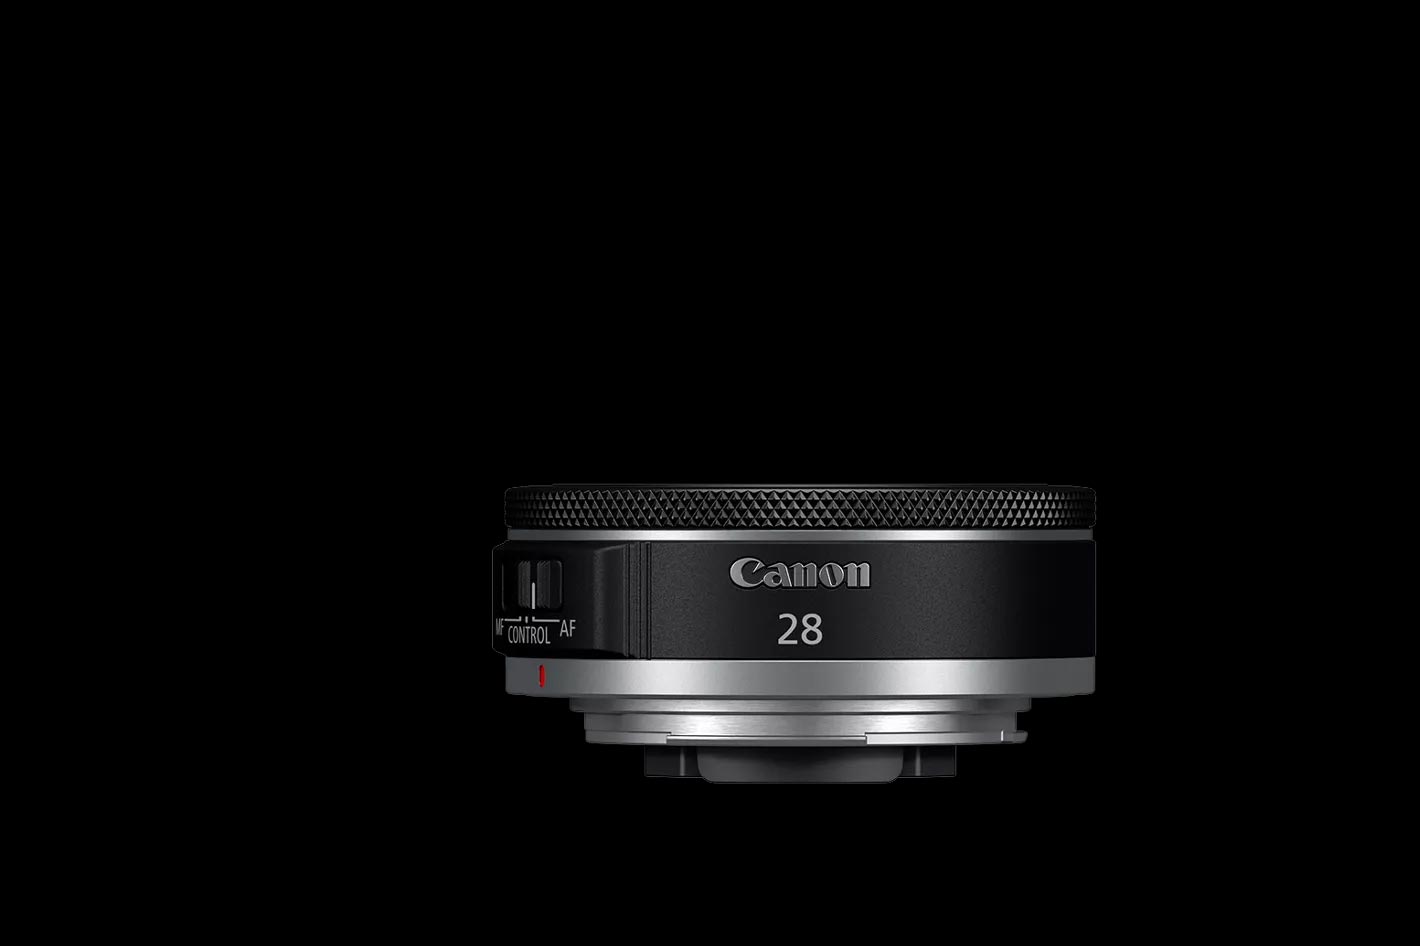 Canon EOS R100: Canon’s answer to smartphones